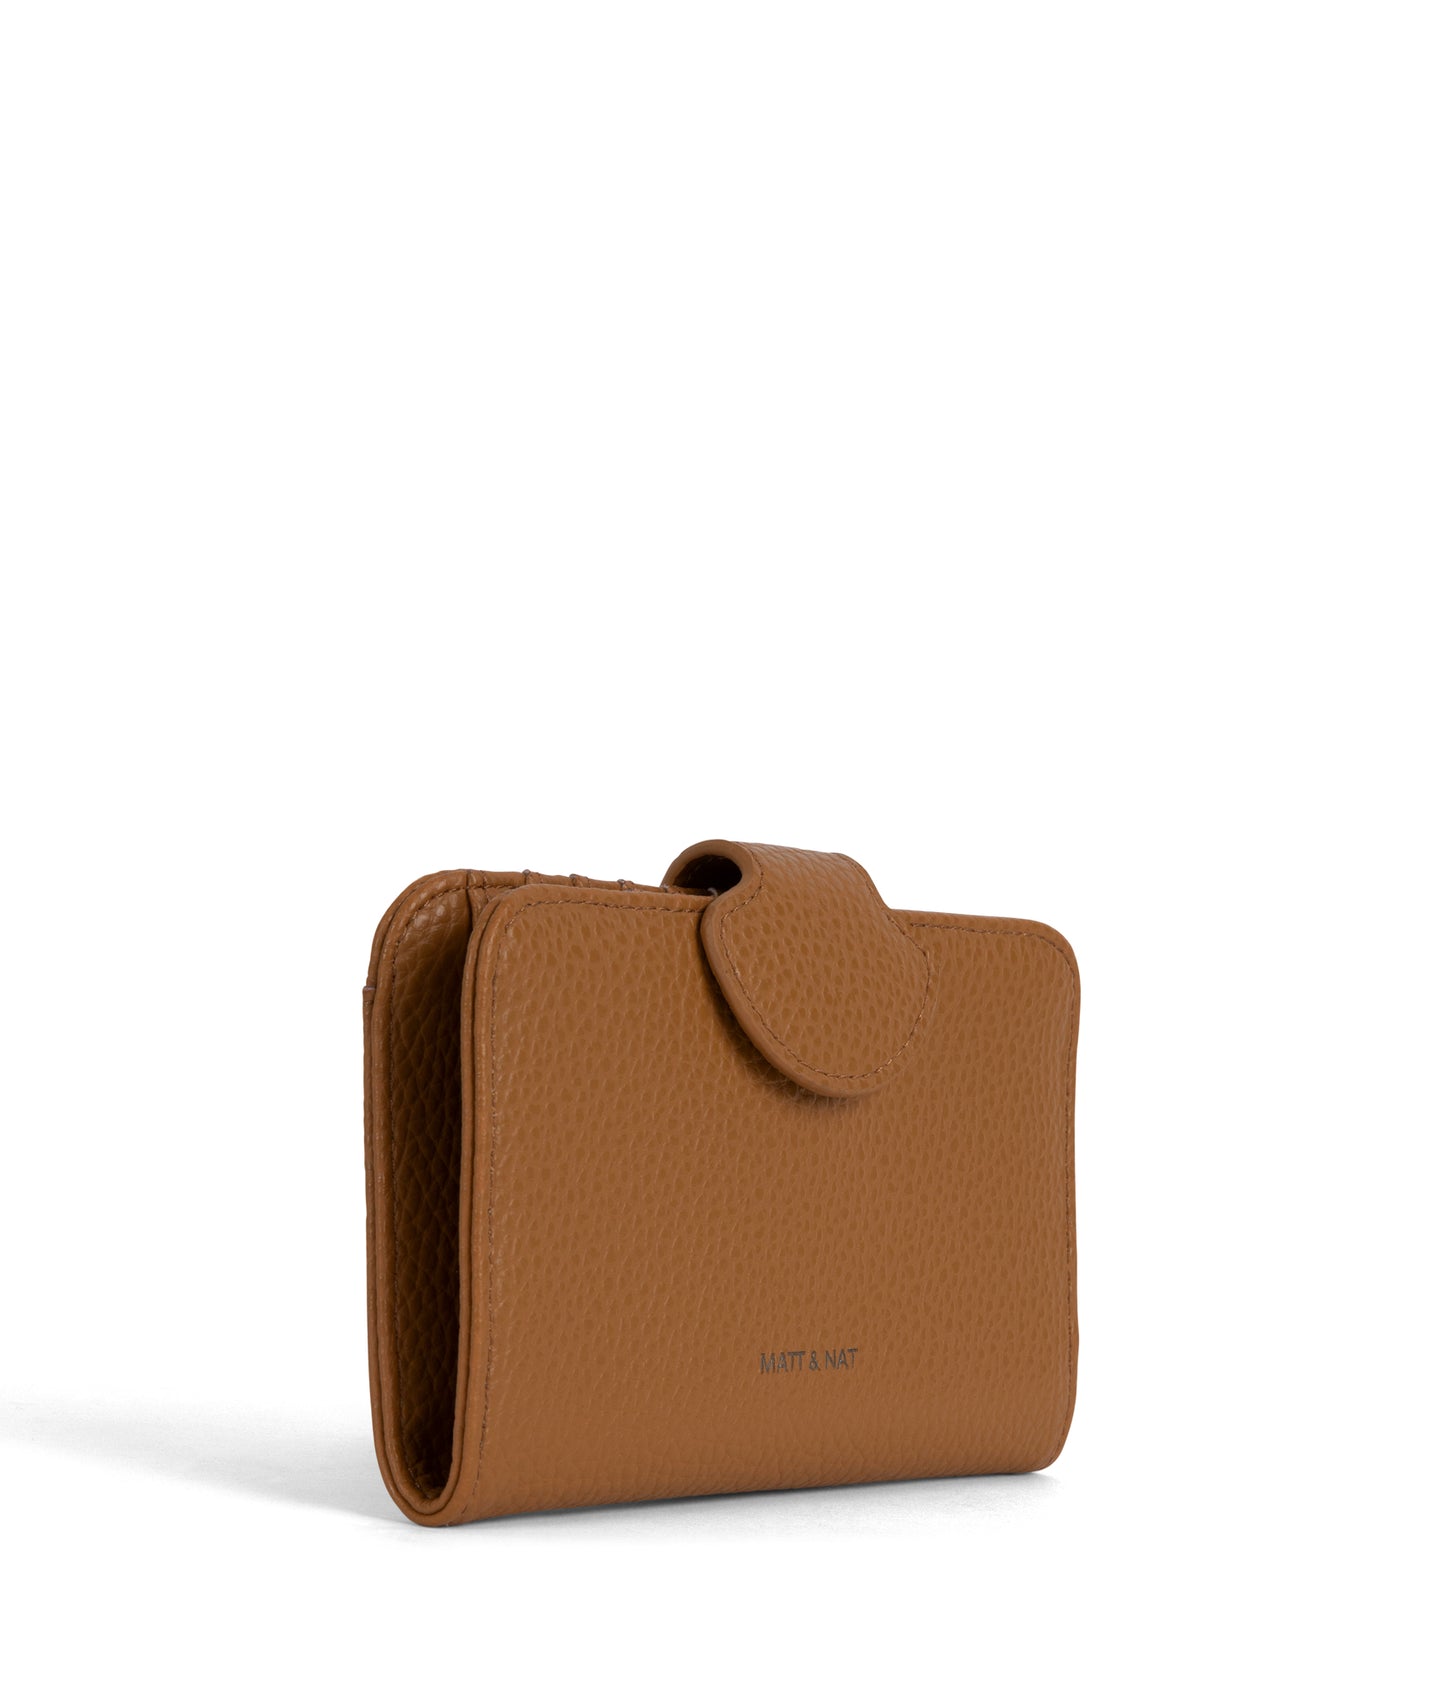 FLOATSM Small Vegan Wallet - Purity | Color: Tan, Brown - variant::amber